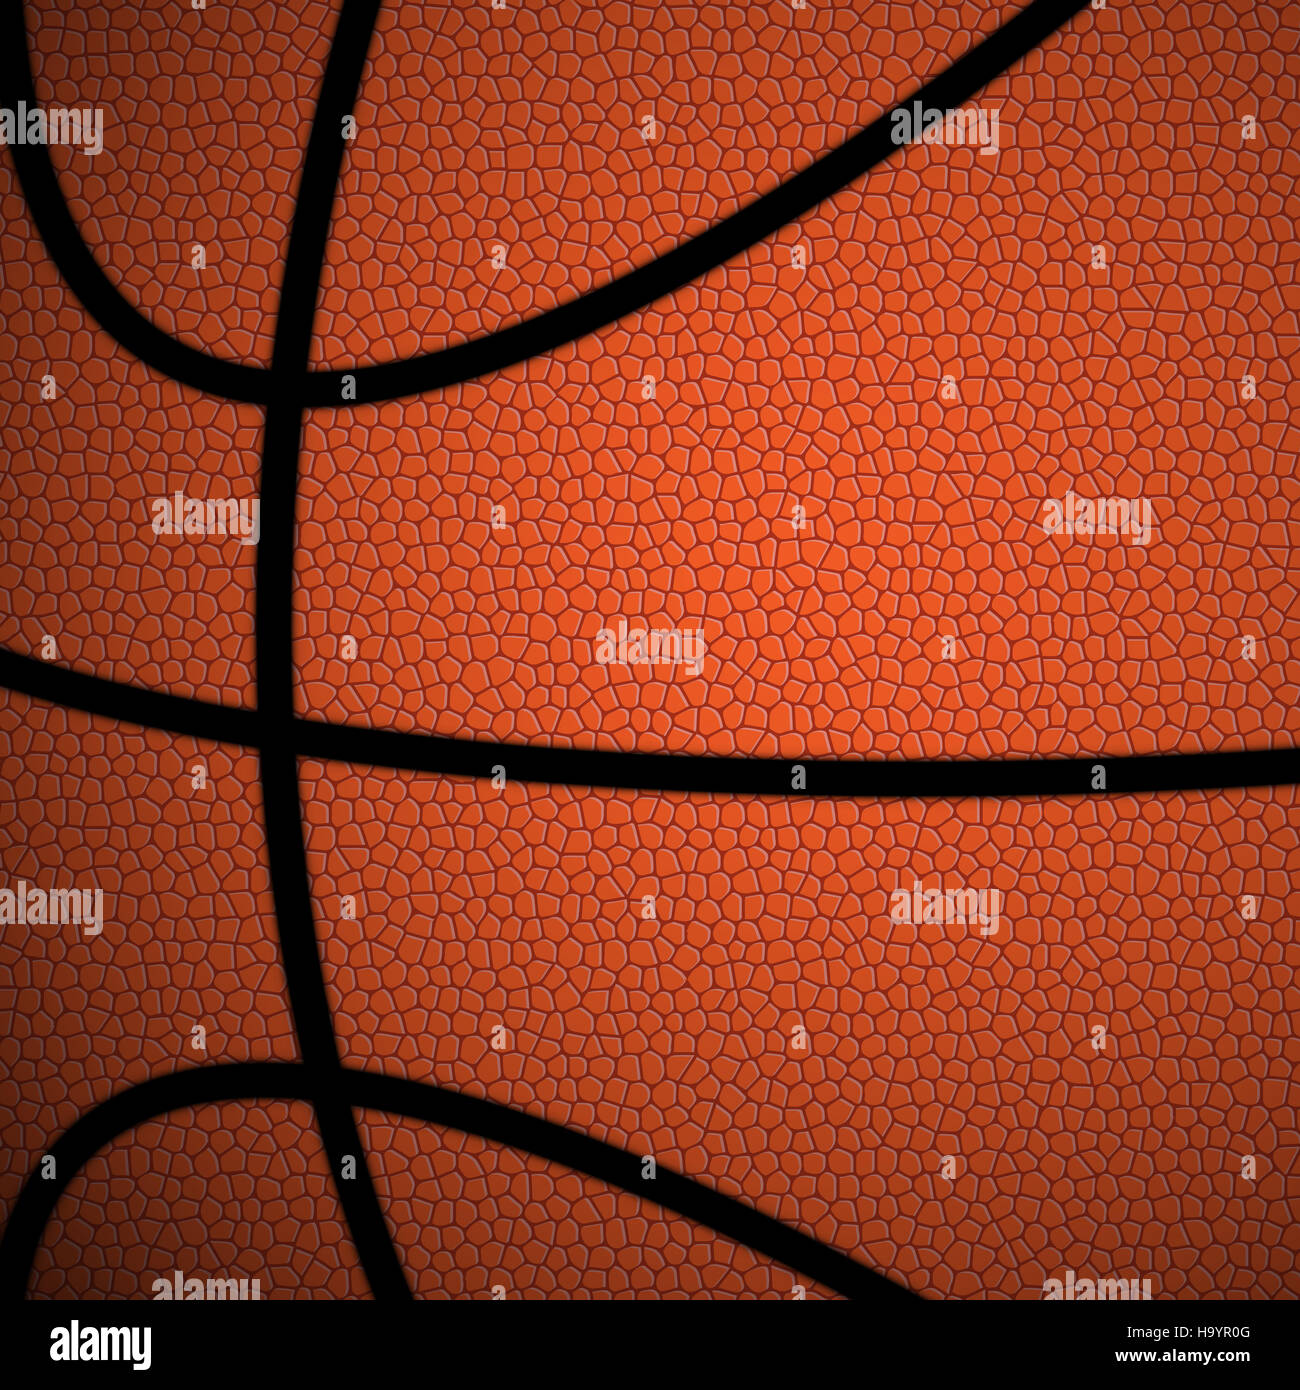 Orange/Brown Basketball close up illustration Stock Photo